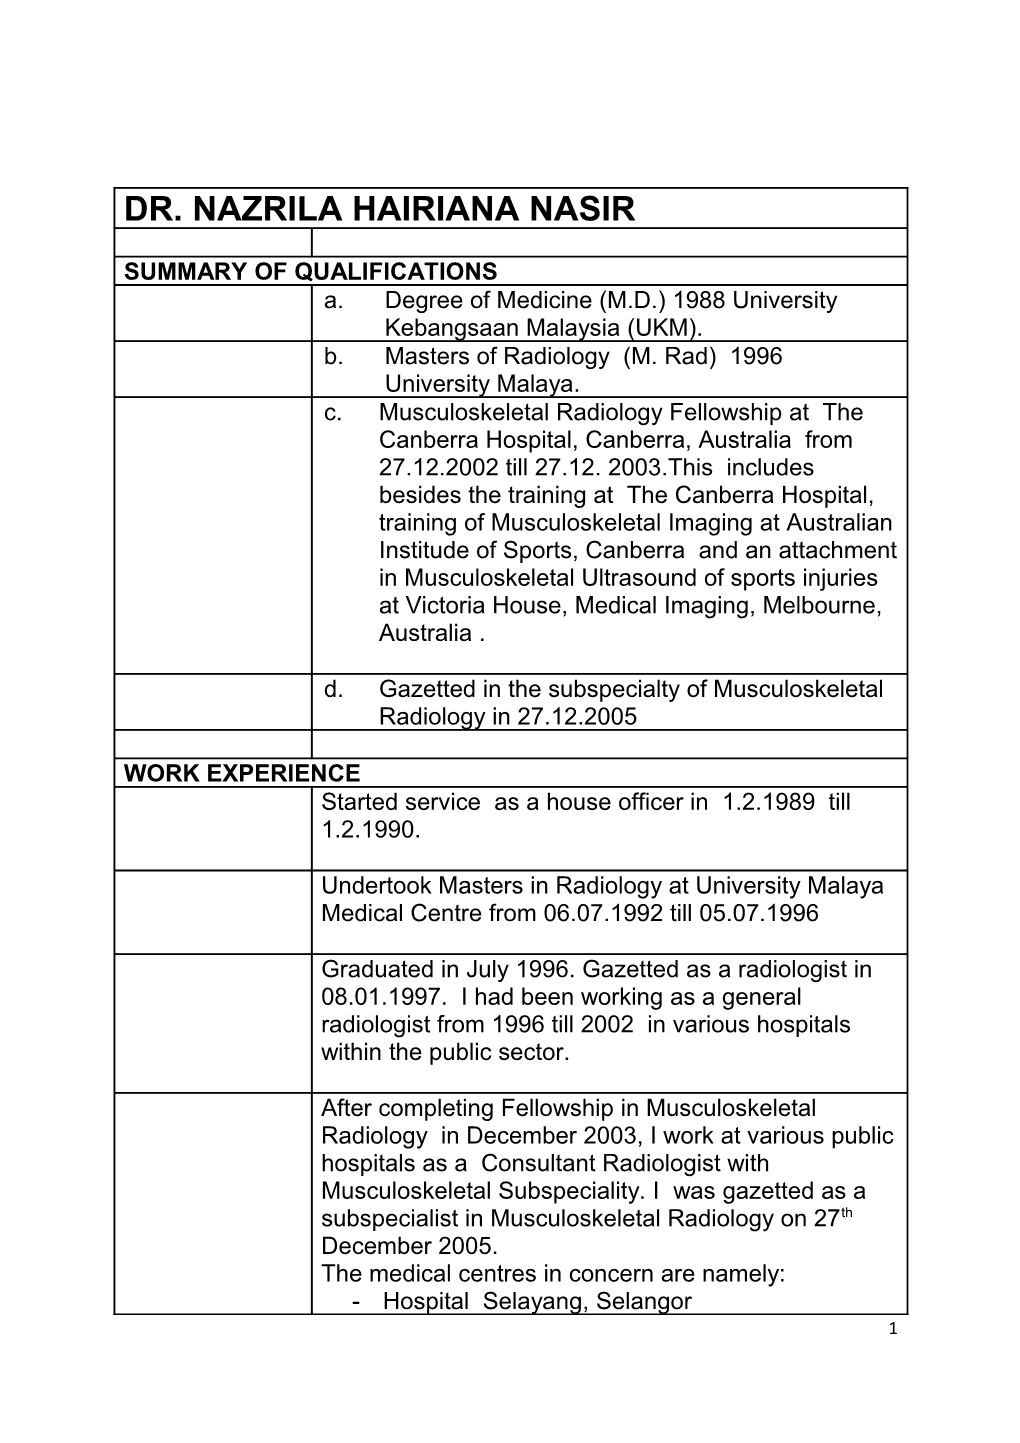 Degree of Medicine (M.D.) 1988 University Kebangsaan Malaysia (UKM)